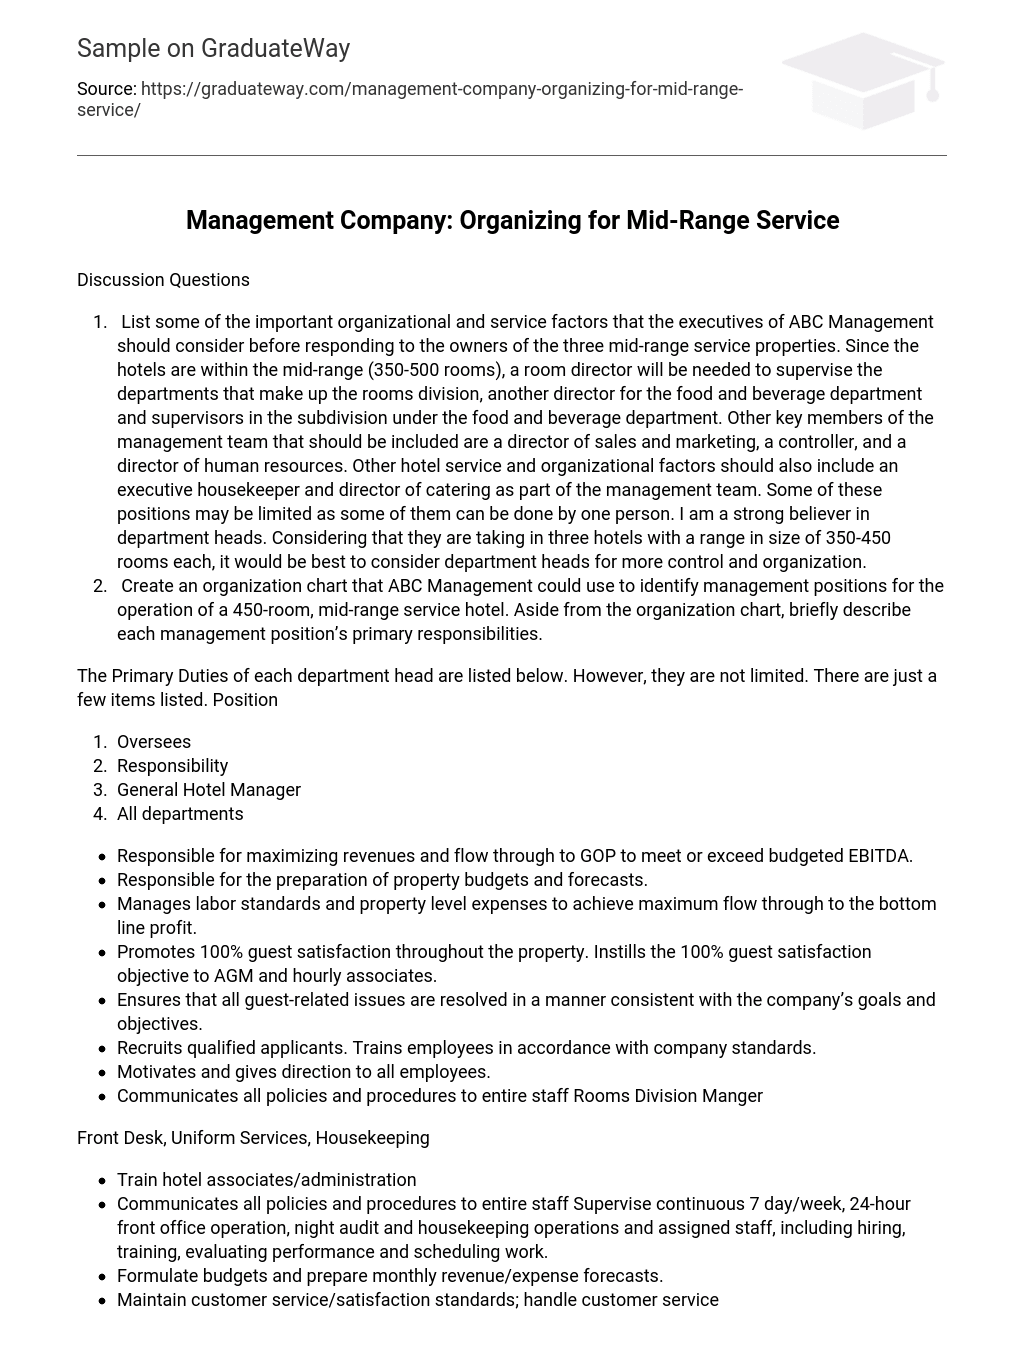 Management Company: Organizing for Mid-Range Service